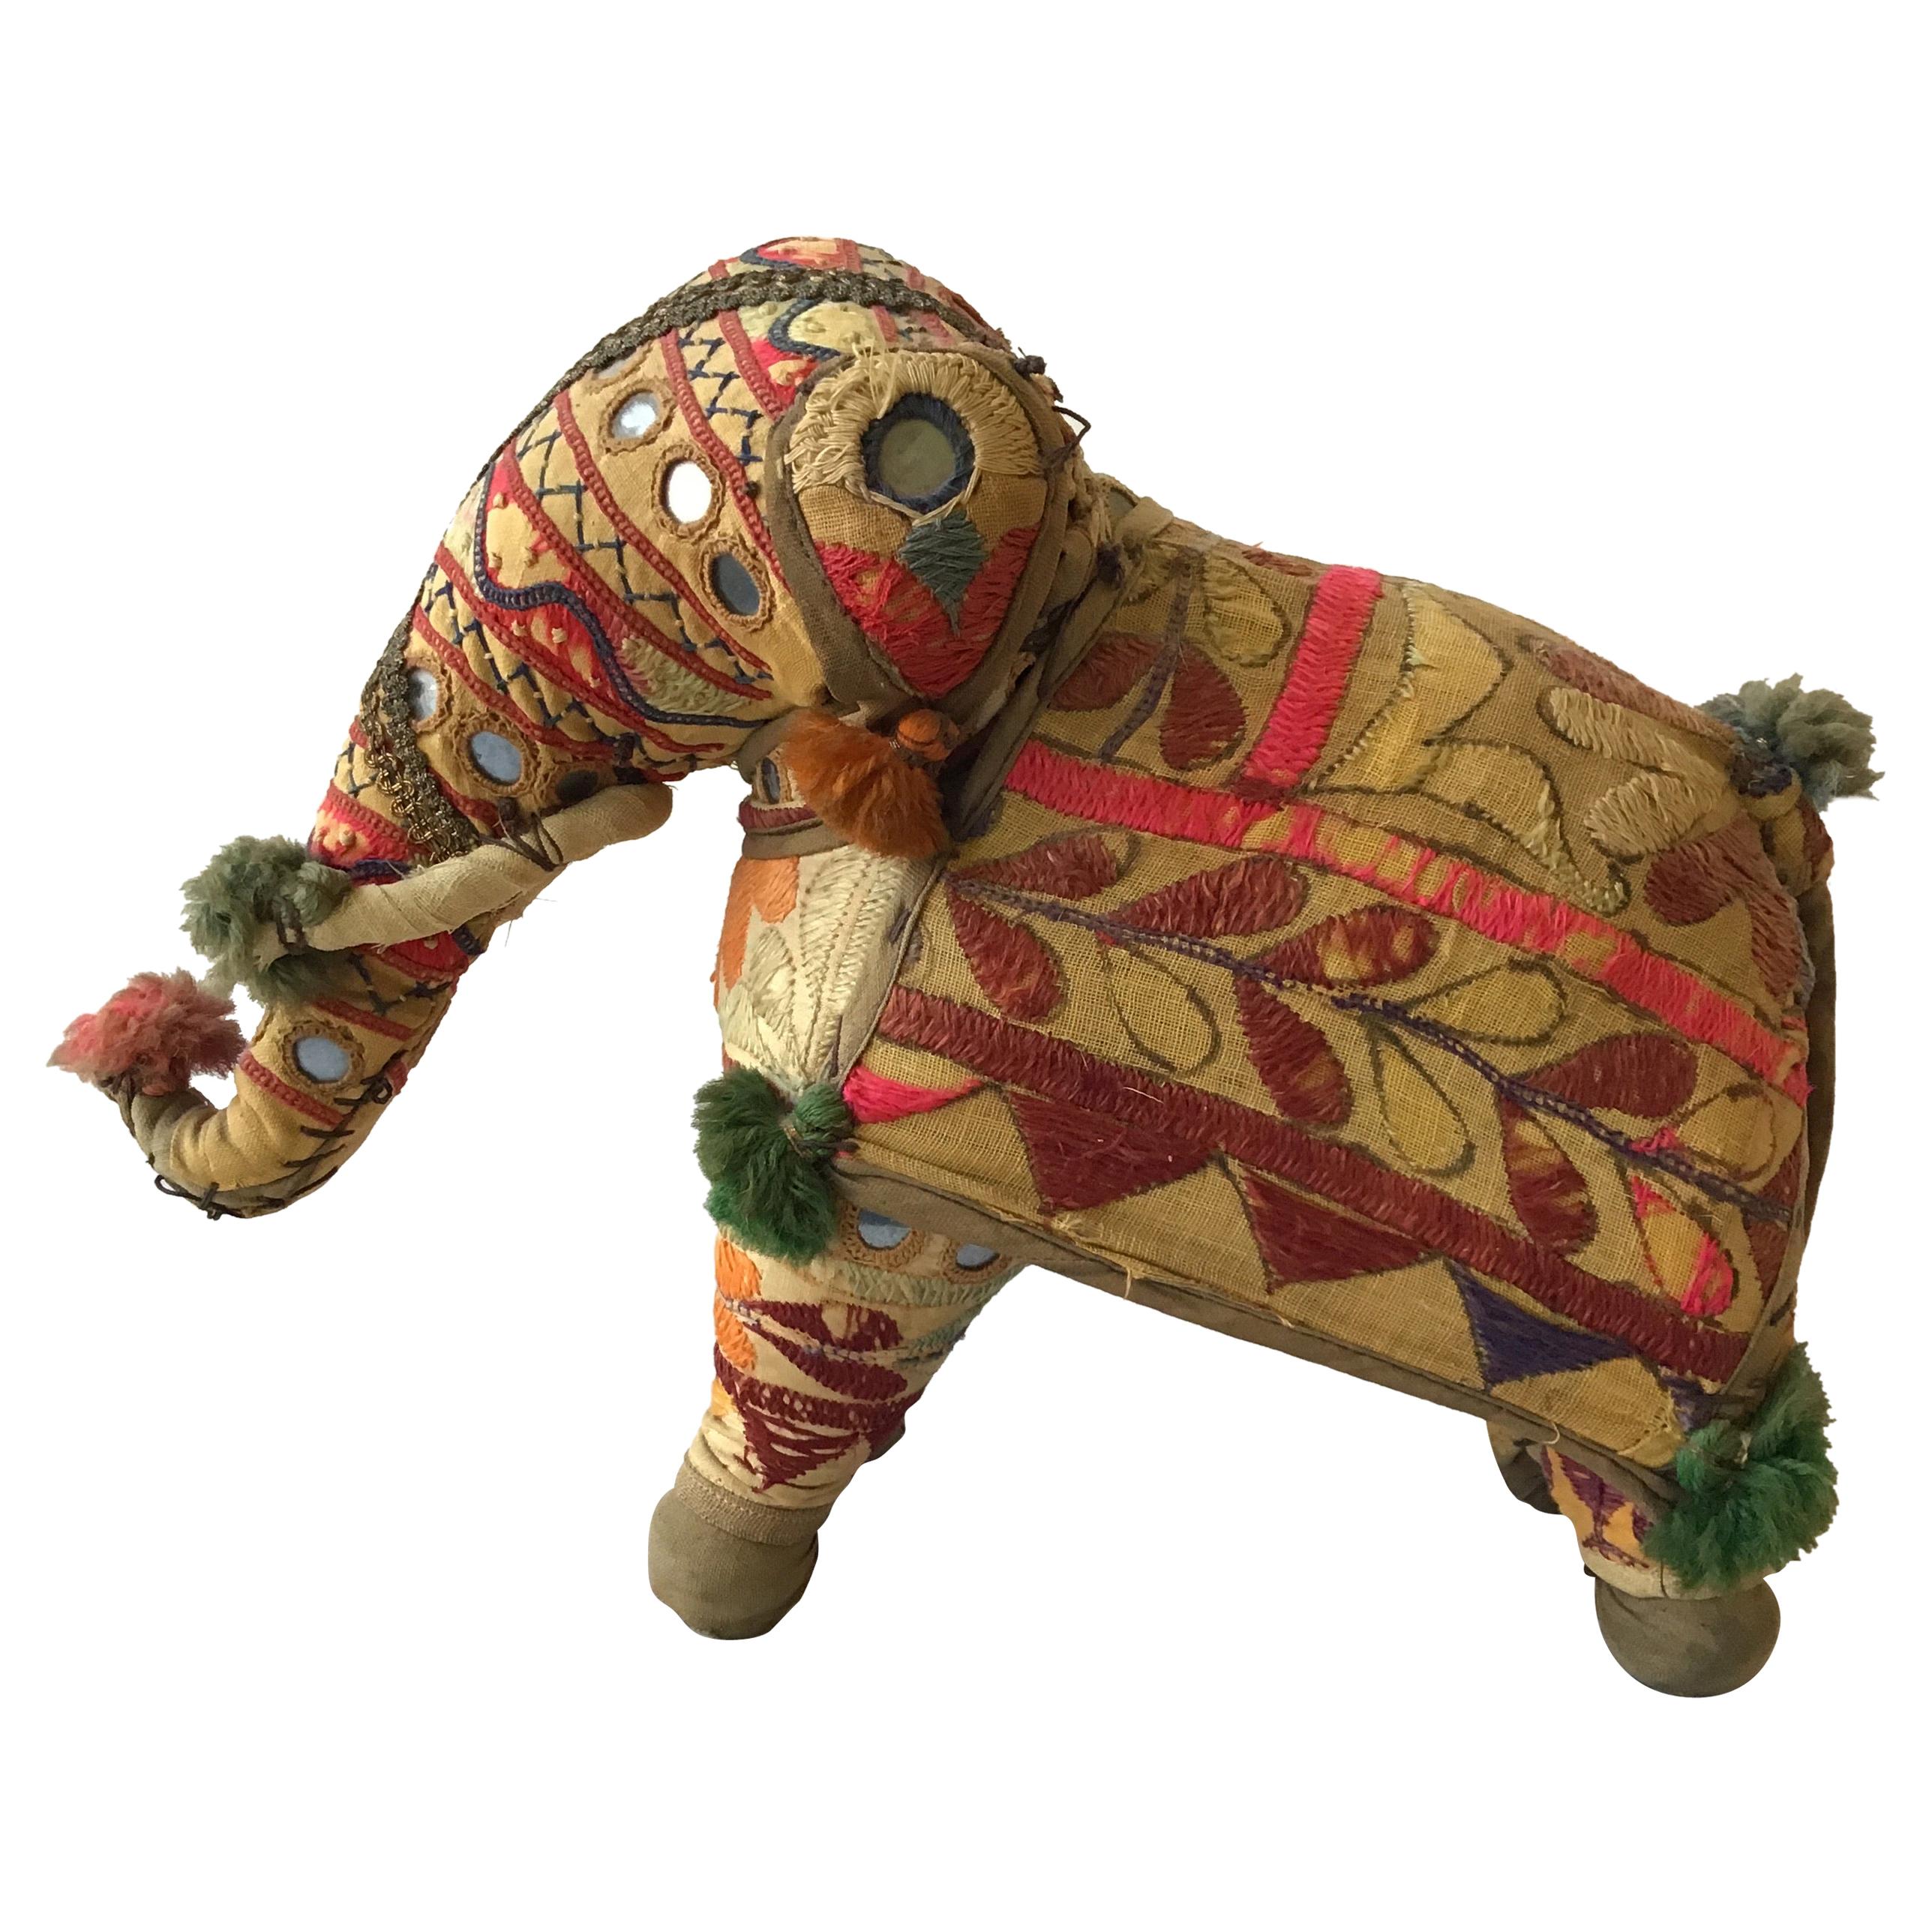 1960s Handmade Stuffed Elephant Toy from India